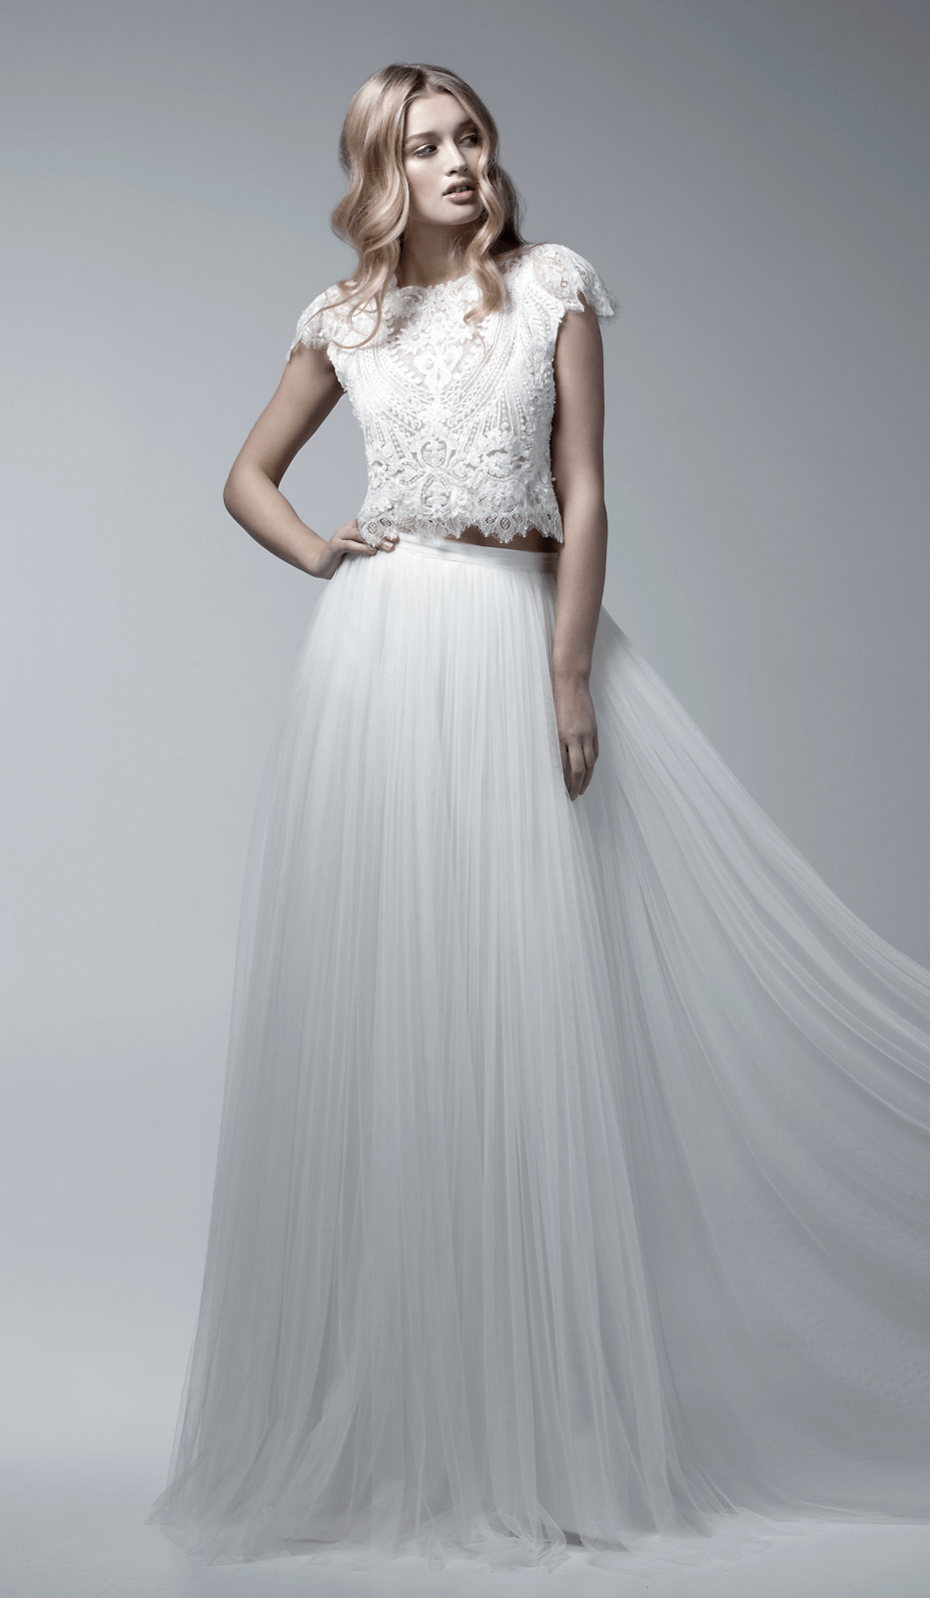 couture stuen ekslusive brudekjoler designer brudekjoler angelika dluzen bridal skirt collection